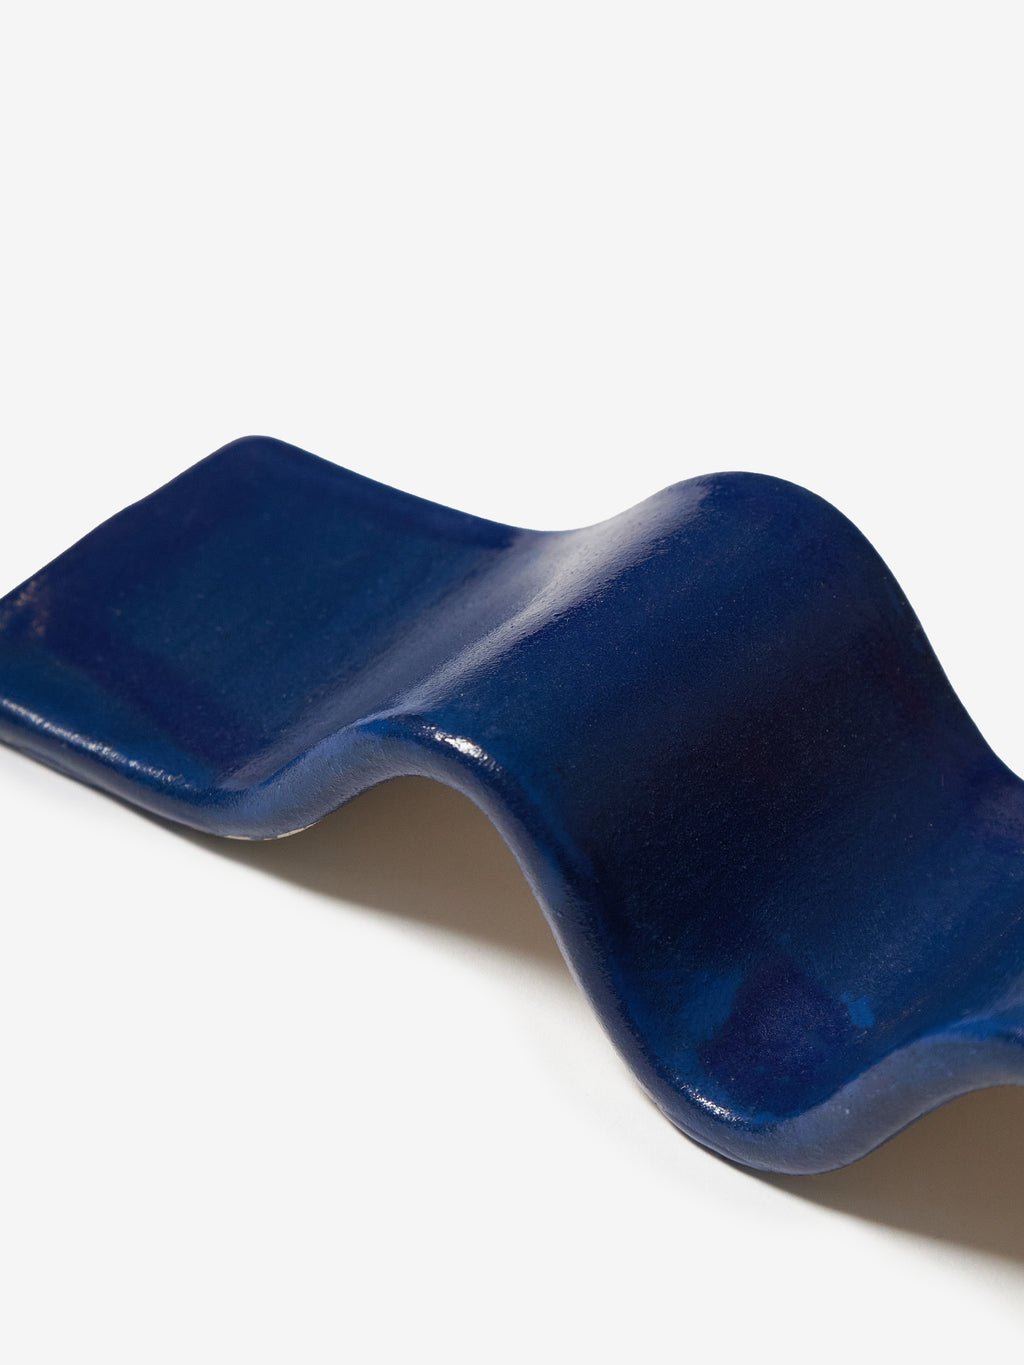 Incense Burner Tray - Ceramic Blue